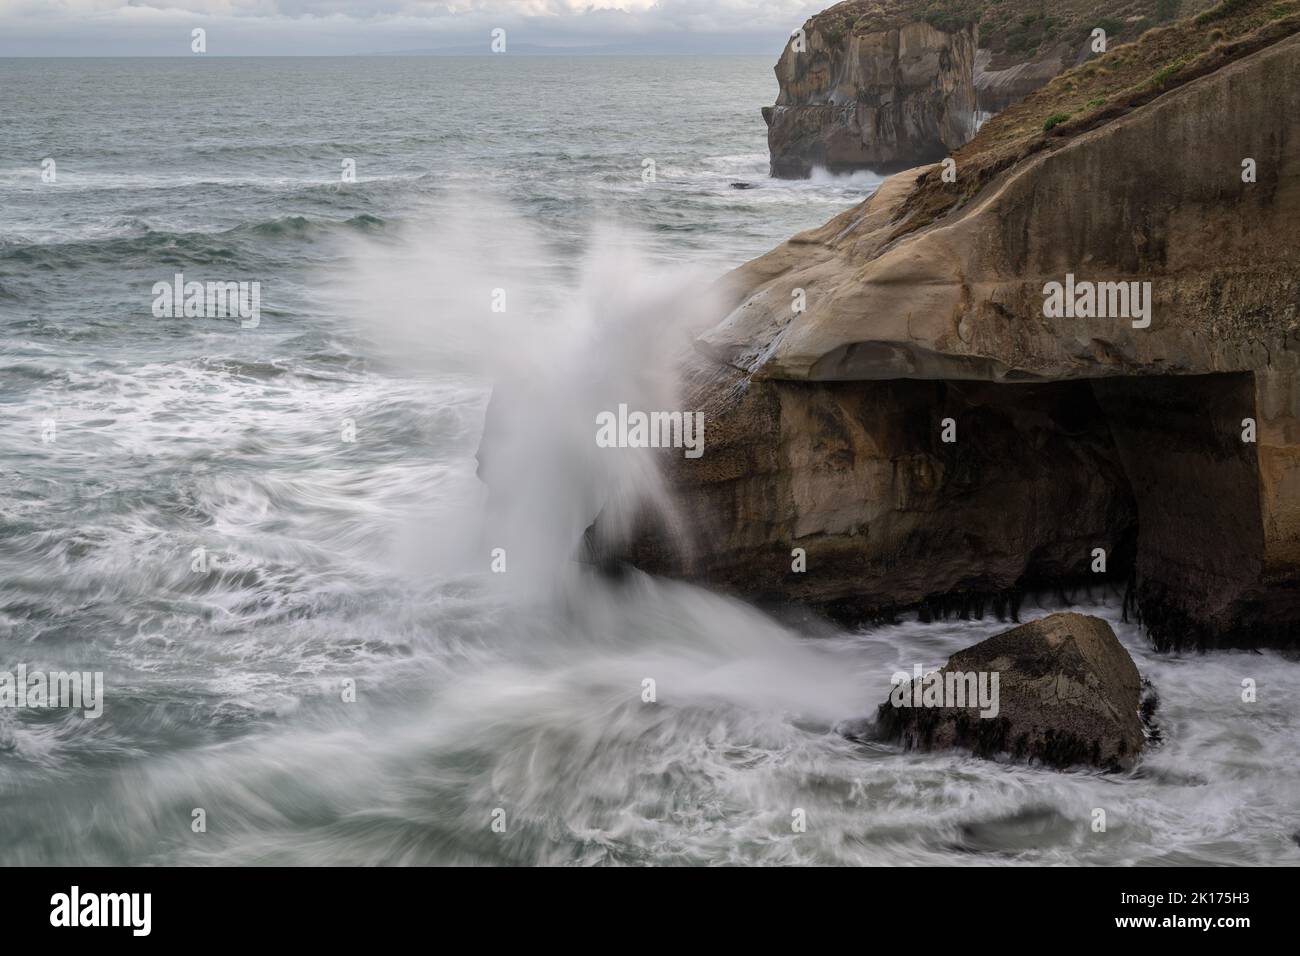 Waves splashing onto rocks at Tunnel Beach, Dunedin. Picture taken using slow shutter speed showing motion of the waves. Stock Photo